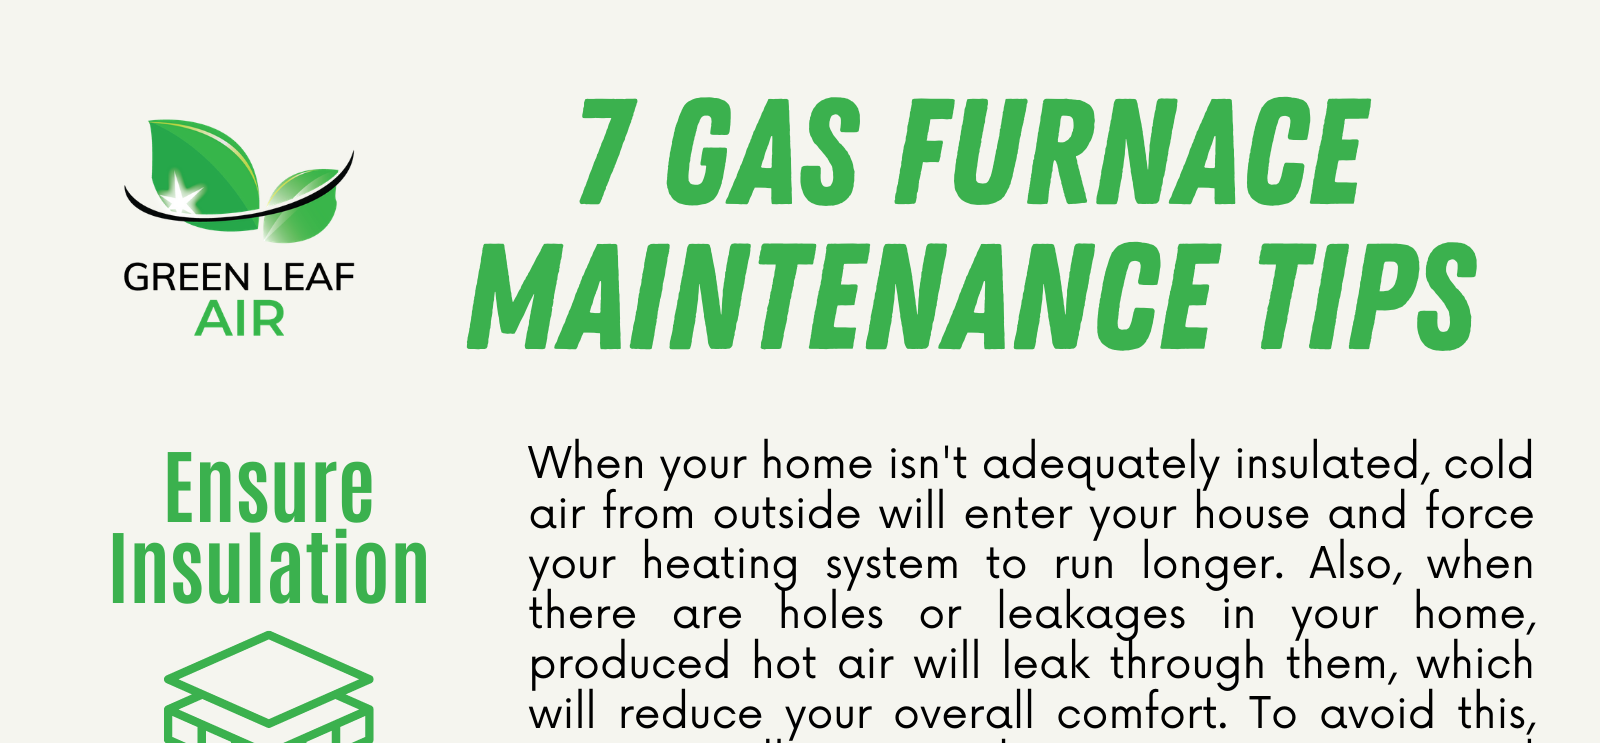 7 Gas Furnace Maintenance Tips